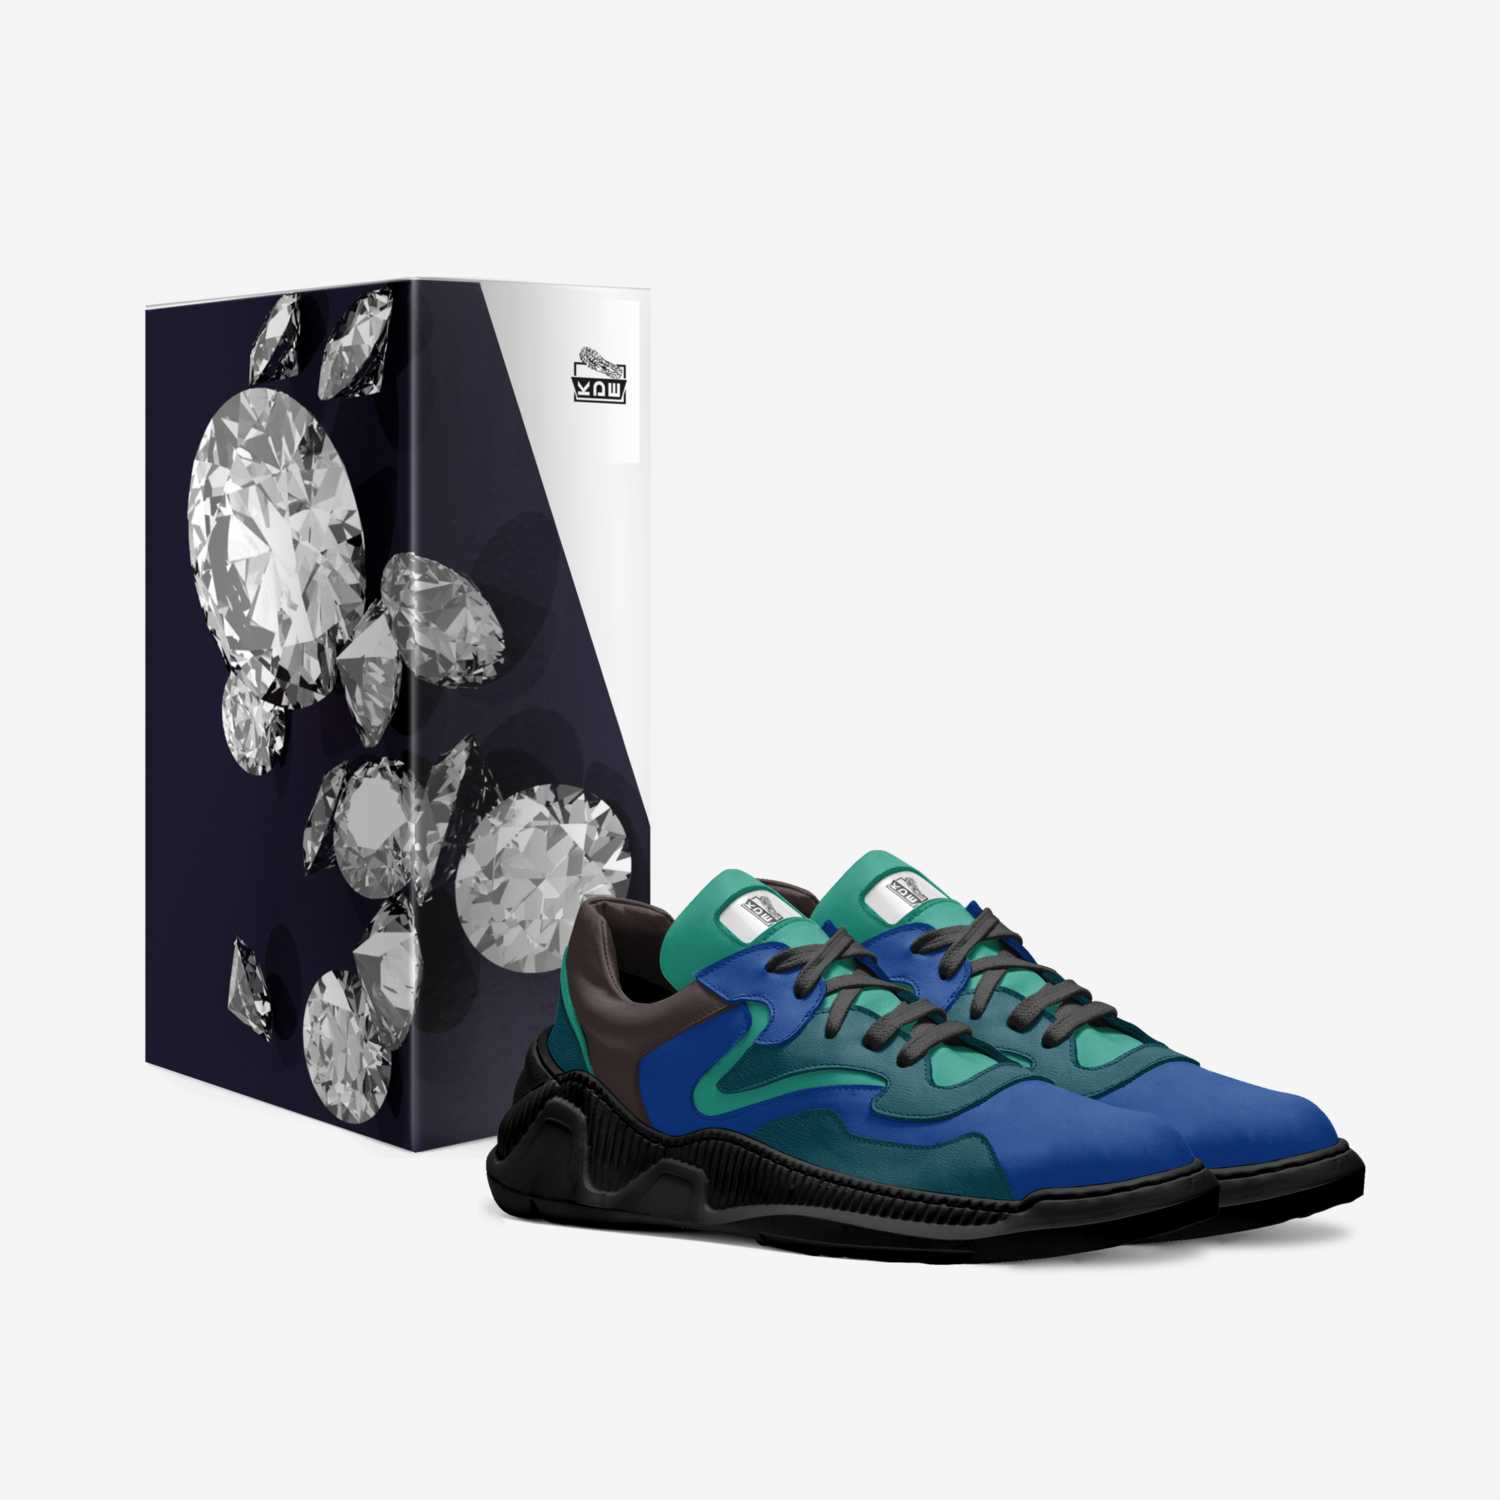 KickDoorKicks custom made in Italy shoes by Kameryn Clavon | Box view